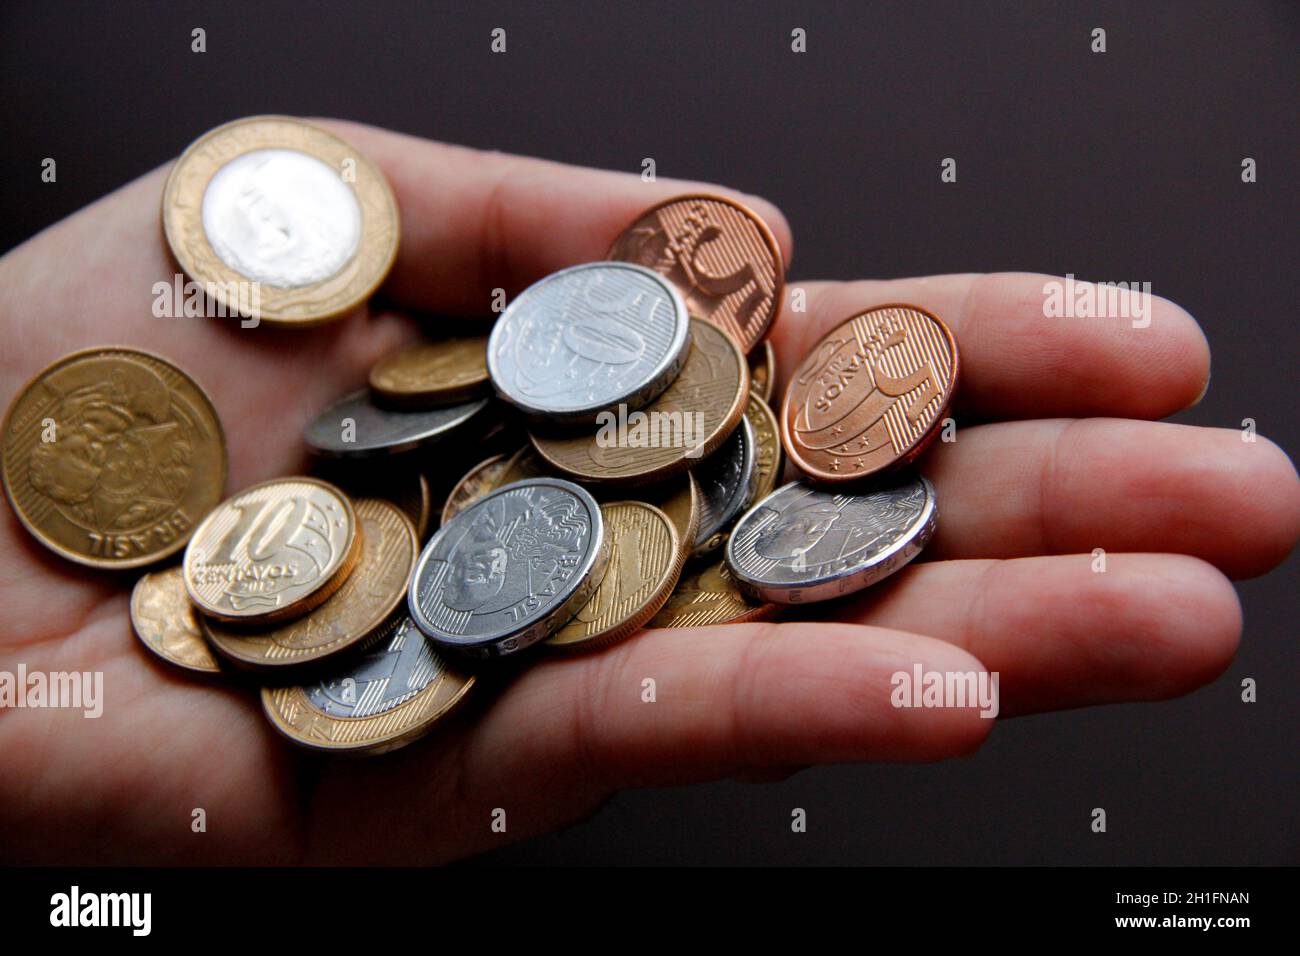 salvador, bahia / brasile - 23 gennaio 2015: La mano contiene monete reali, denaro brasiliano. *** Local Caption *** Foto Stock